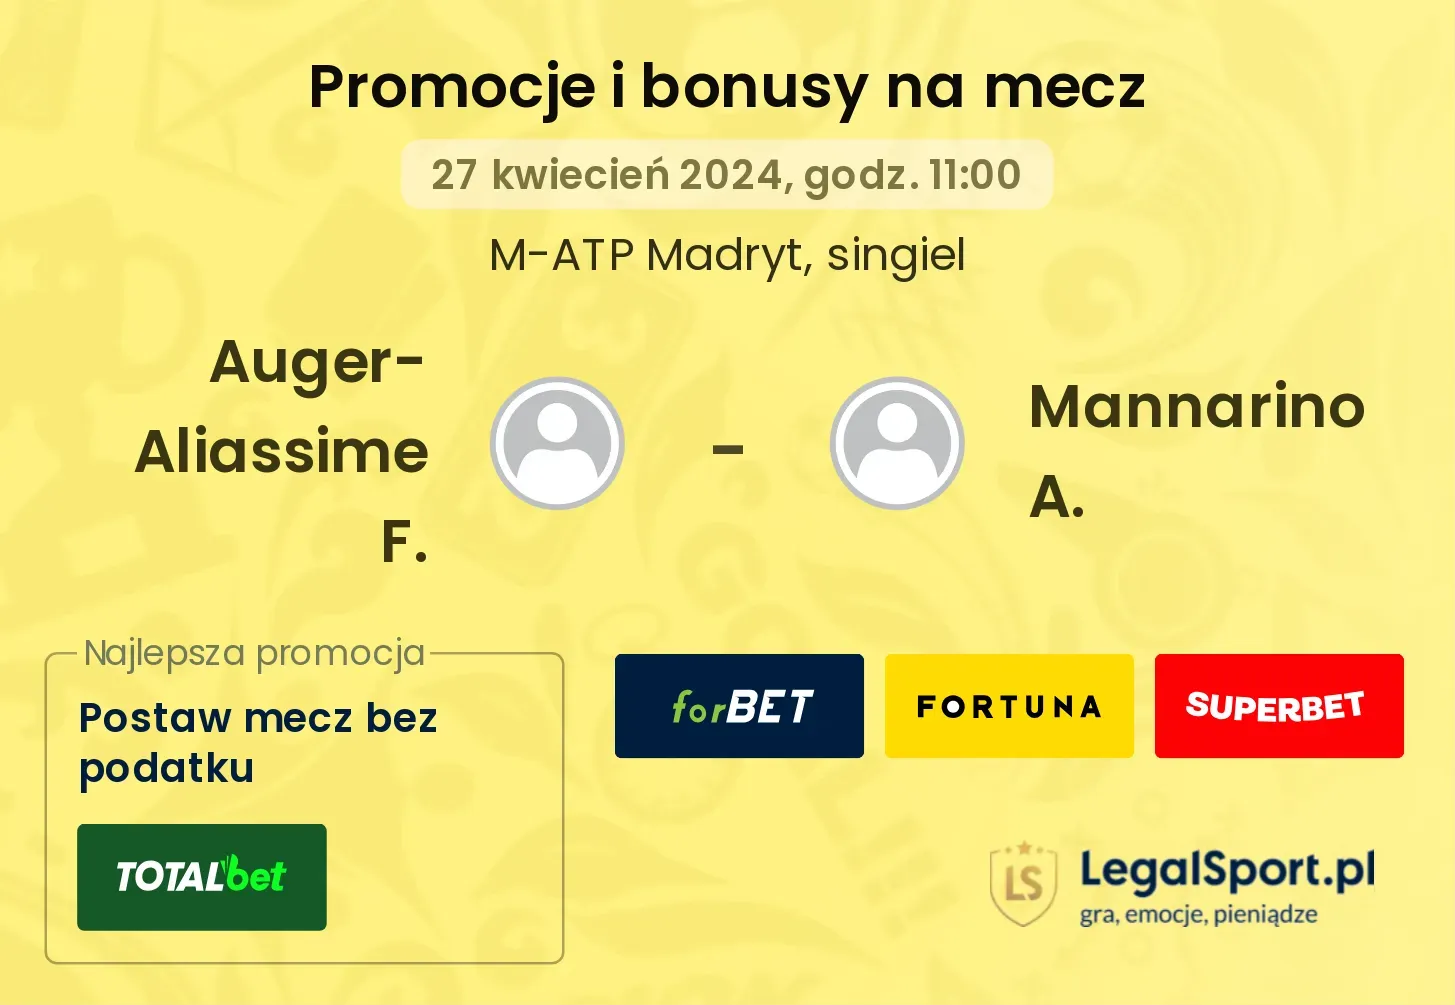 Auger-Aliassime F. - Mannarino A. promocje bonusy na mecz